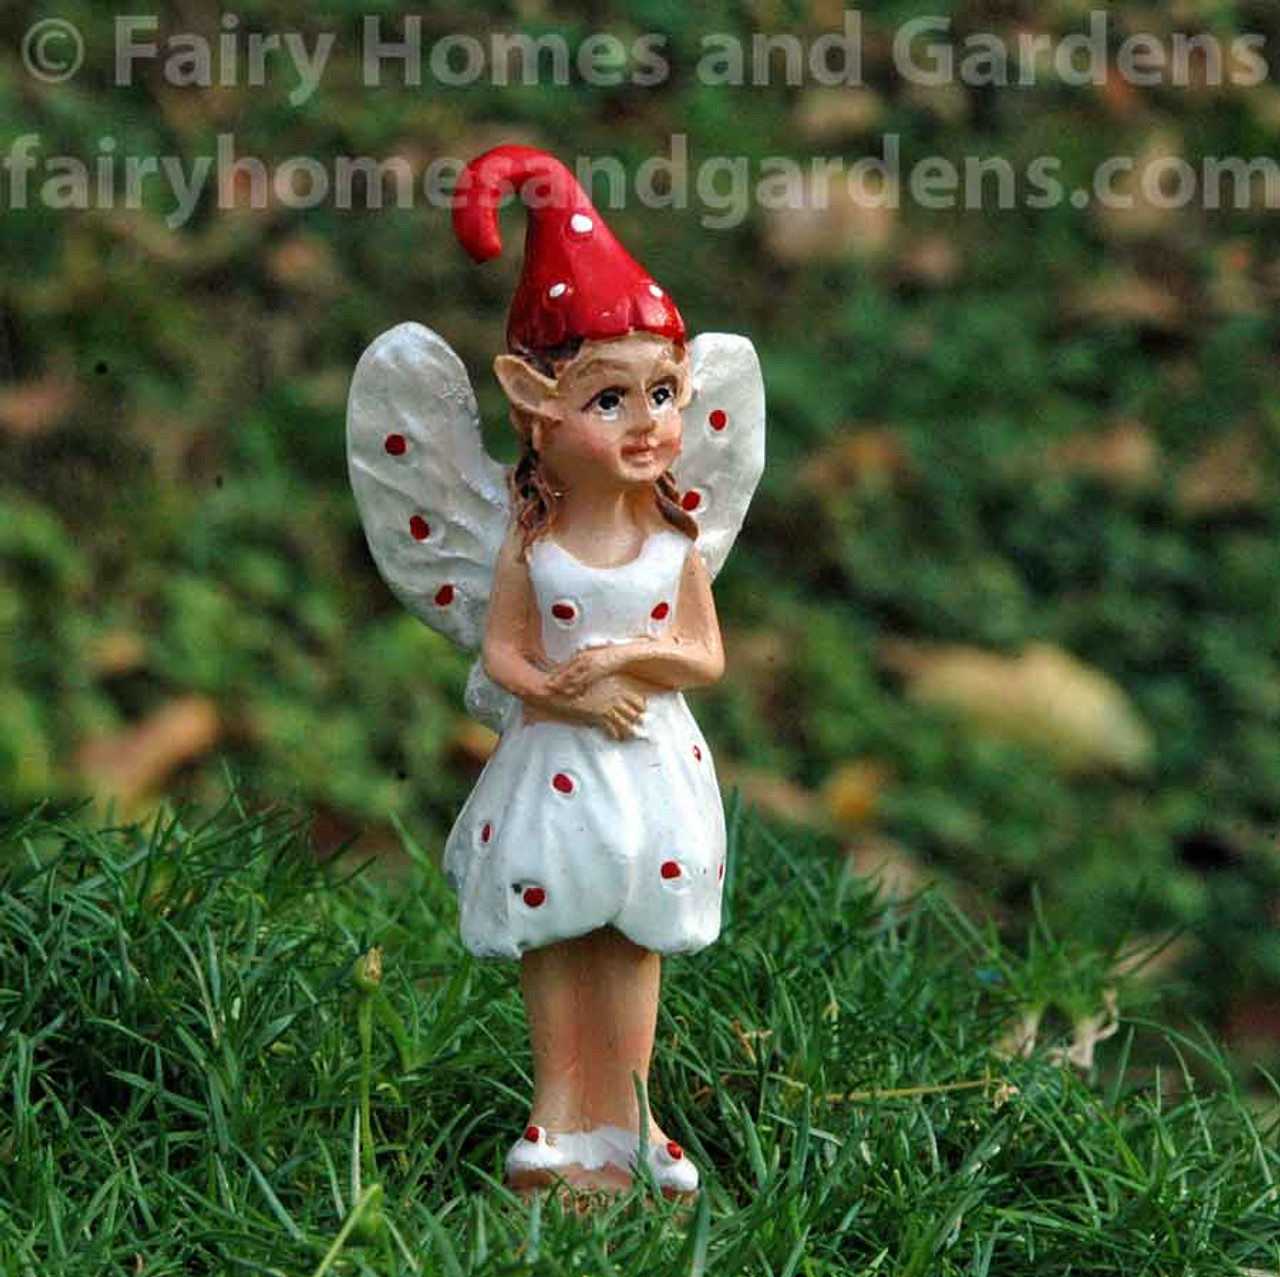 Mini mushrooms fly agaric for decor. Fairy garden mushrooms